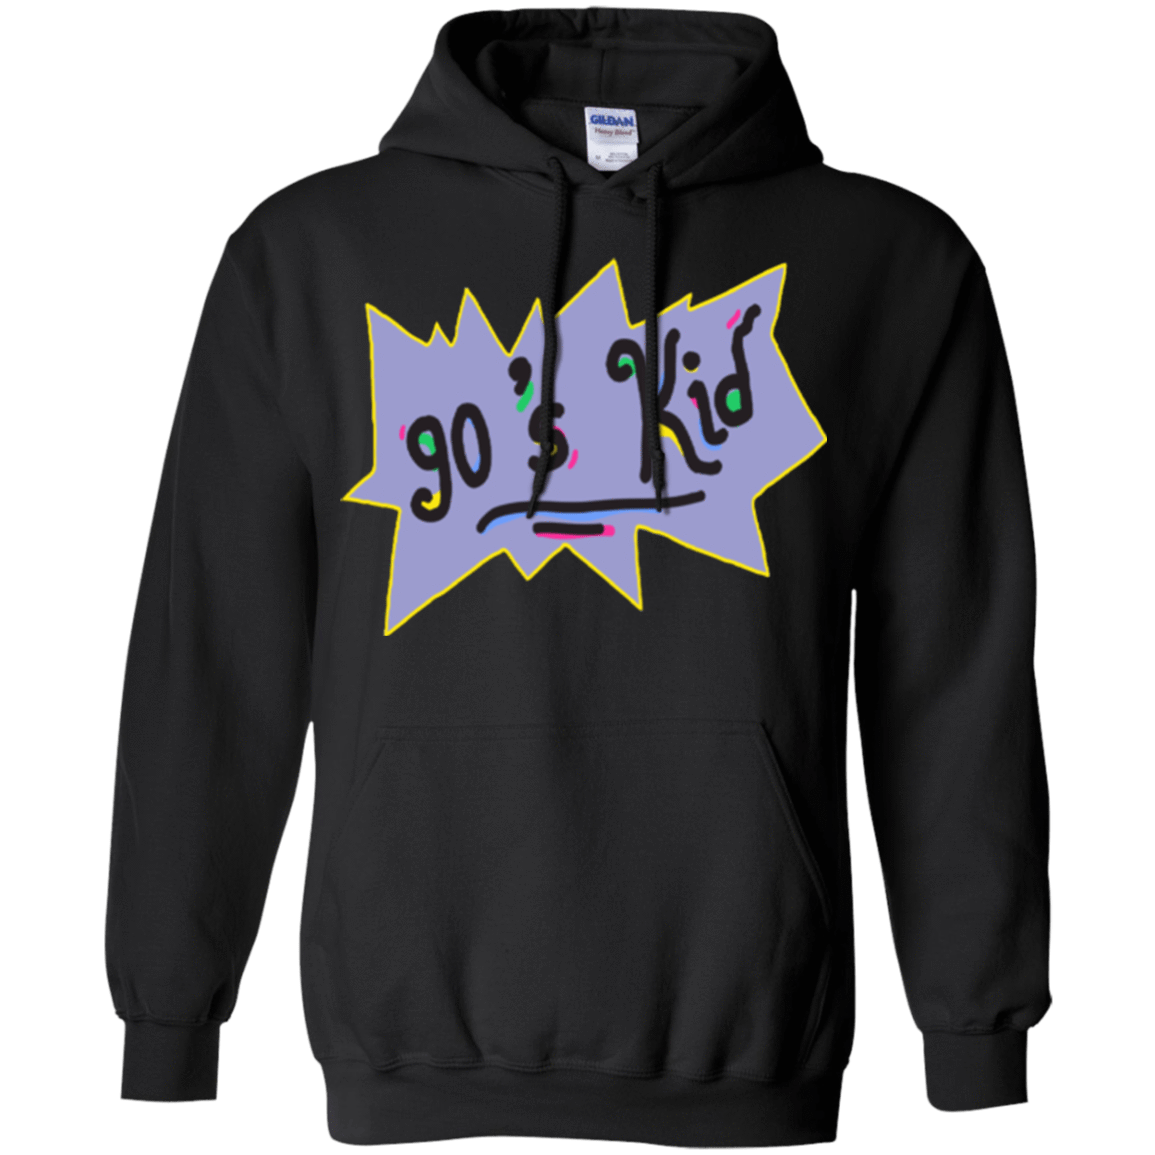 Sweatshirts Black / Small 90's Kid Pullover Hoodie